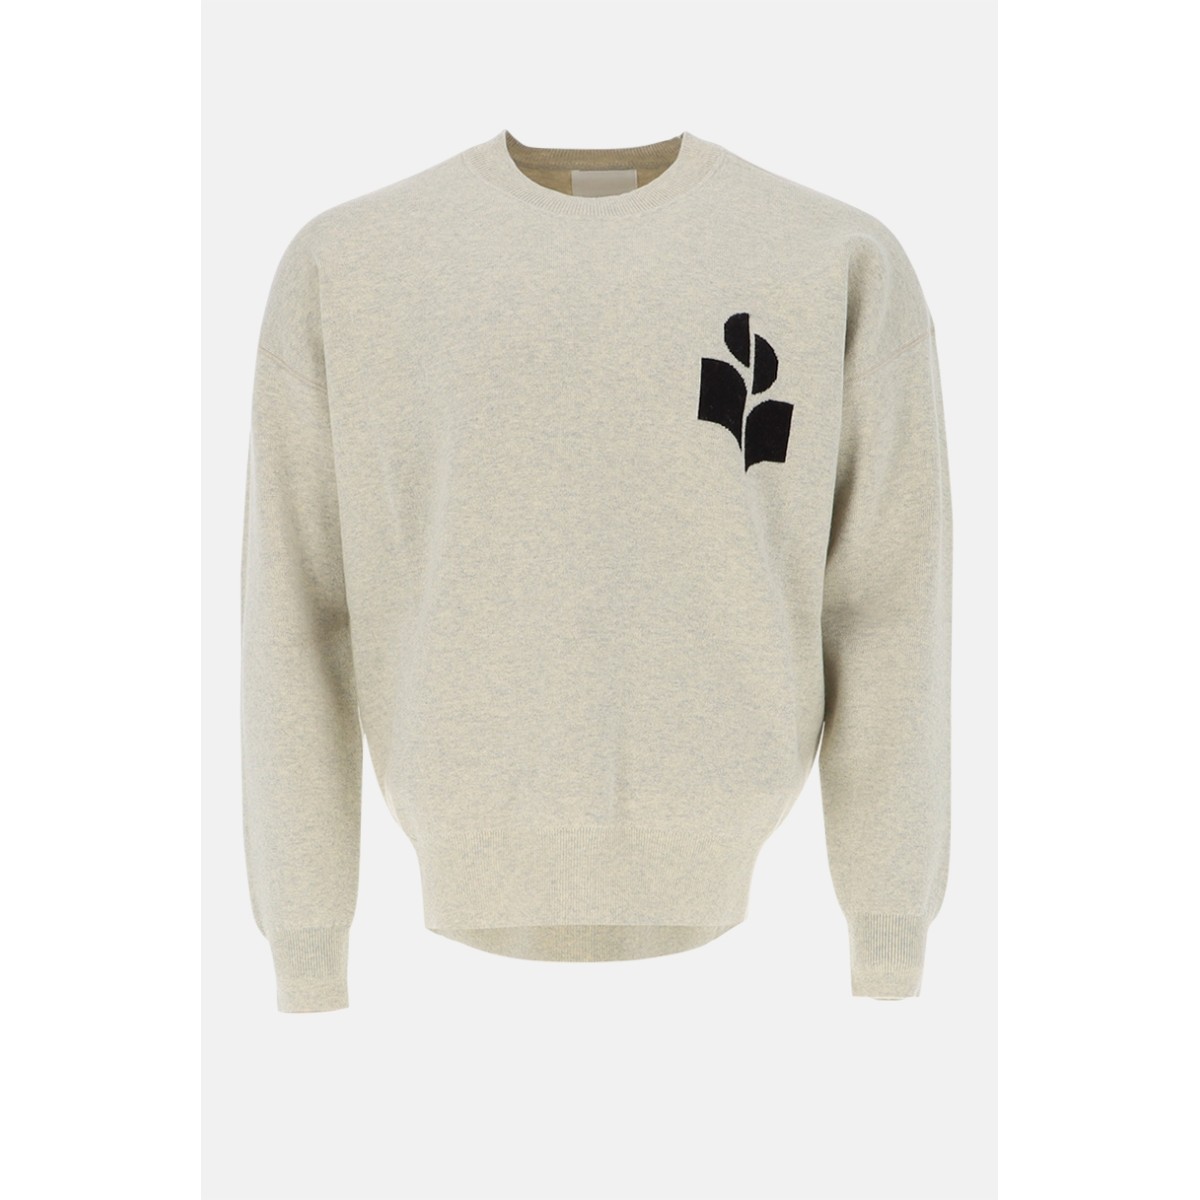 Marant "Atley" Sweater